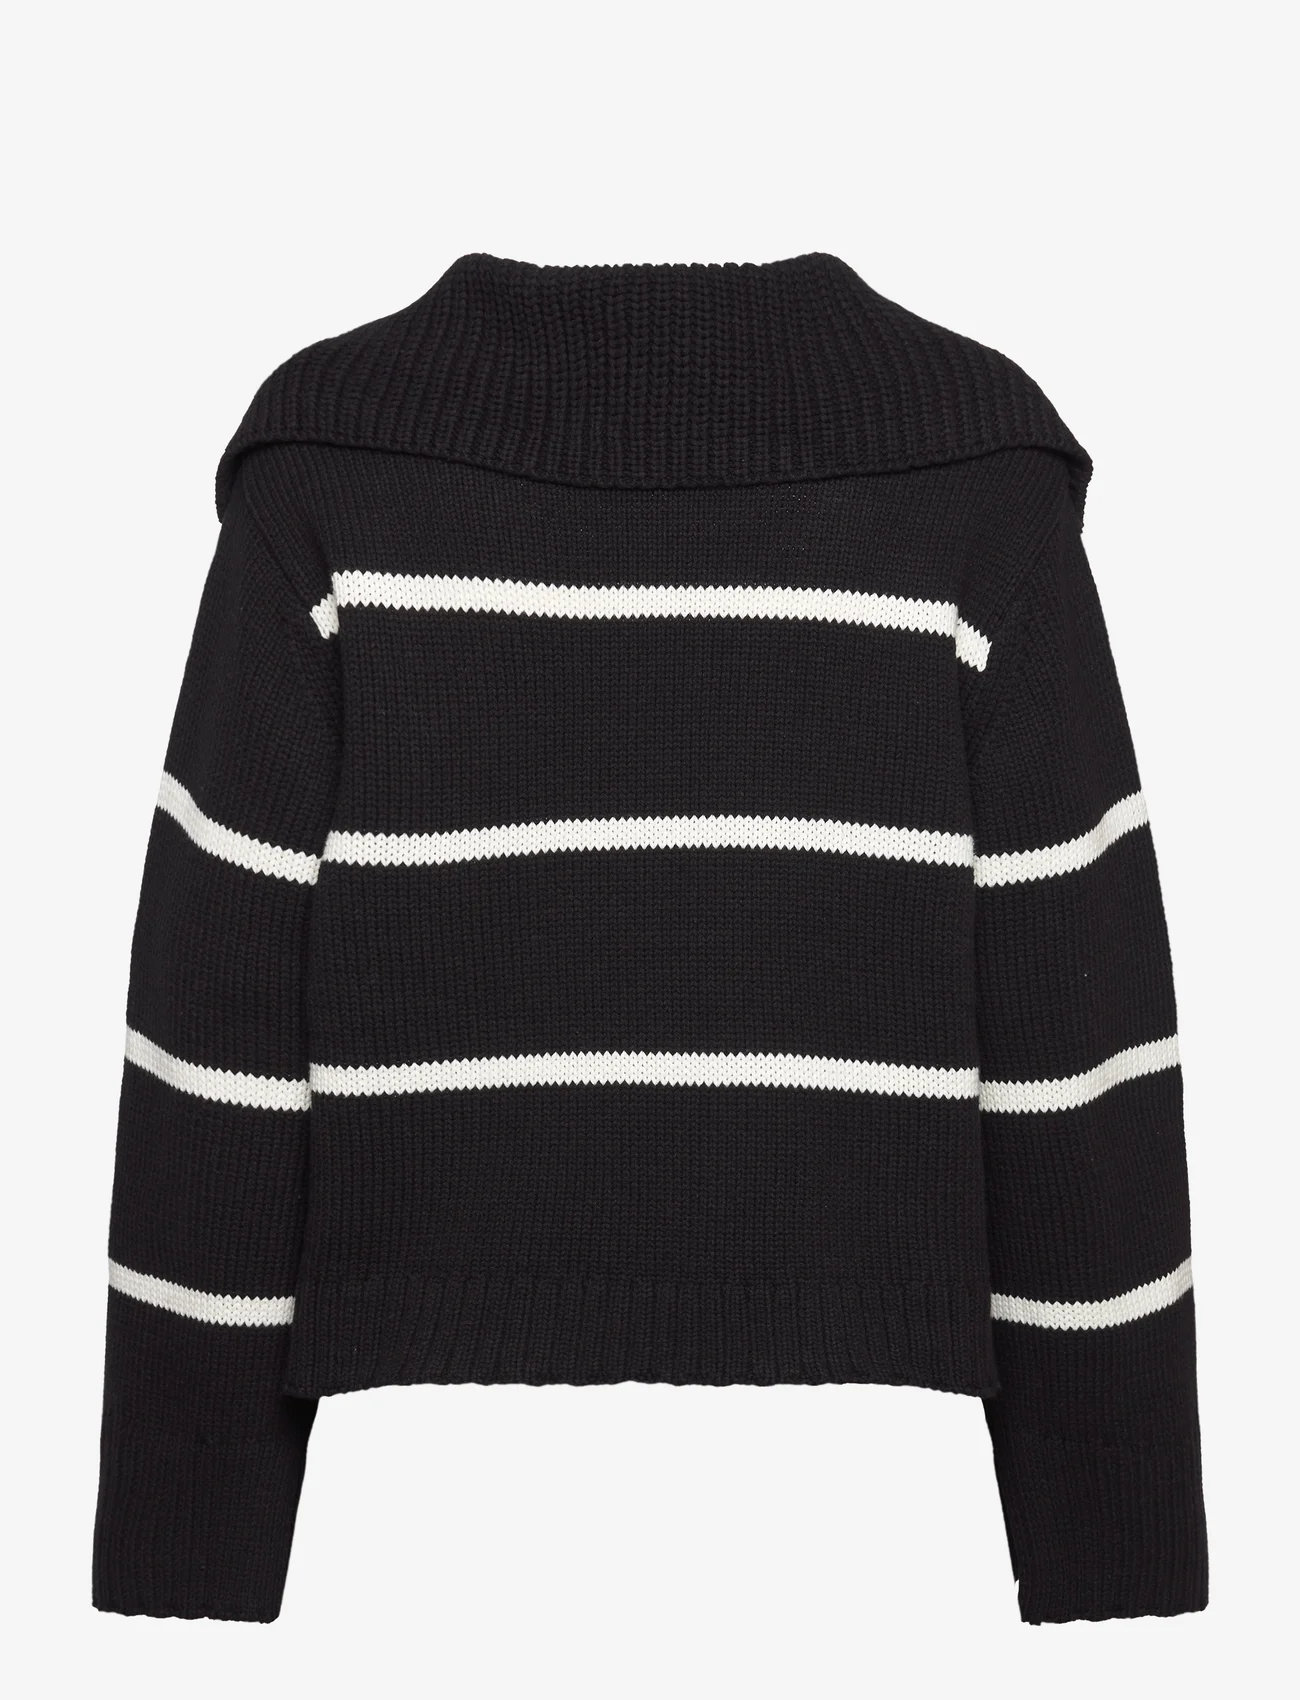 Lindex - Sweater Rana - pullover - black - 1